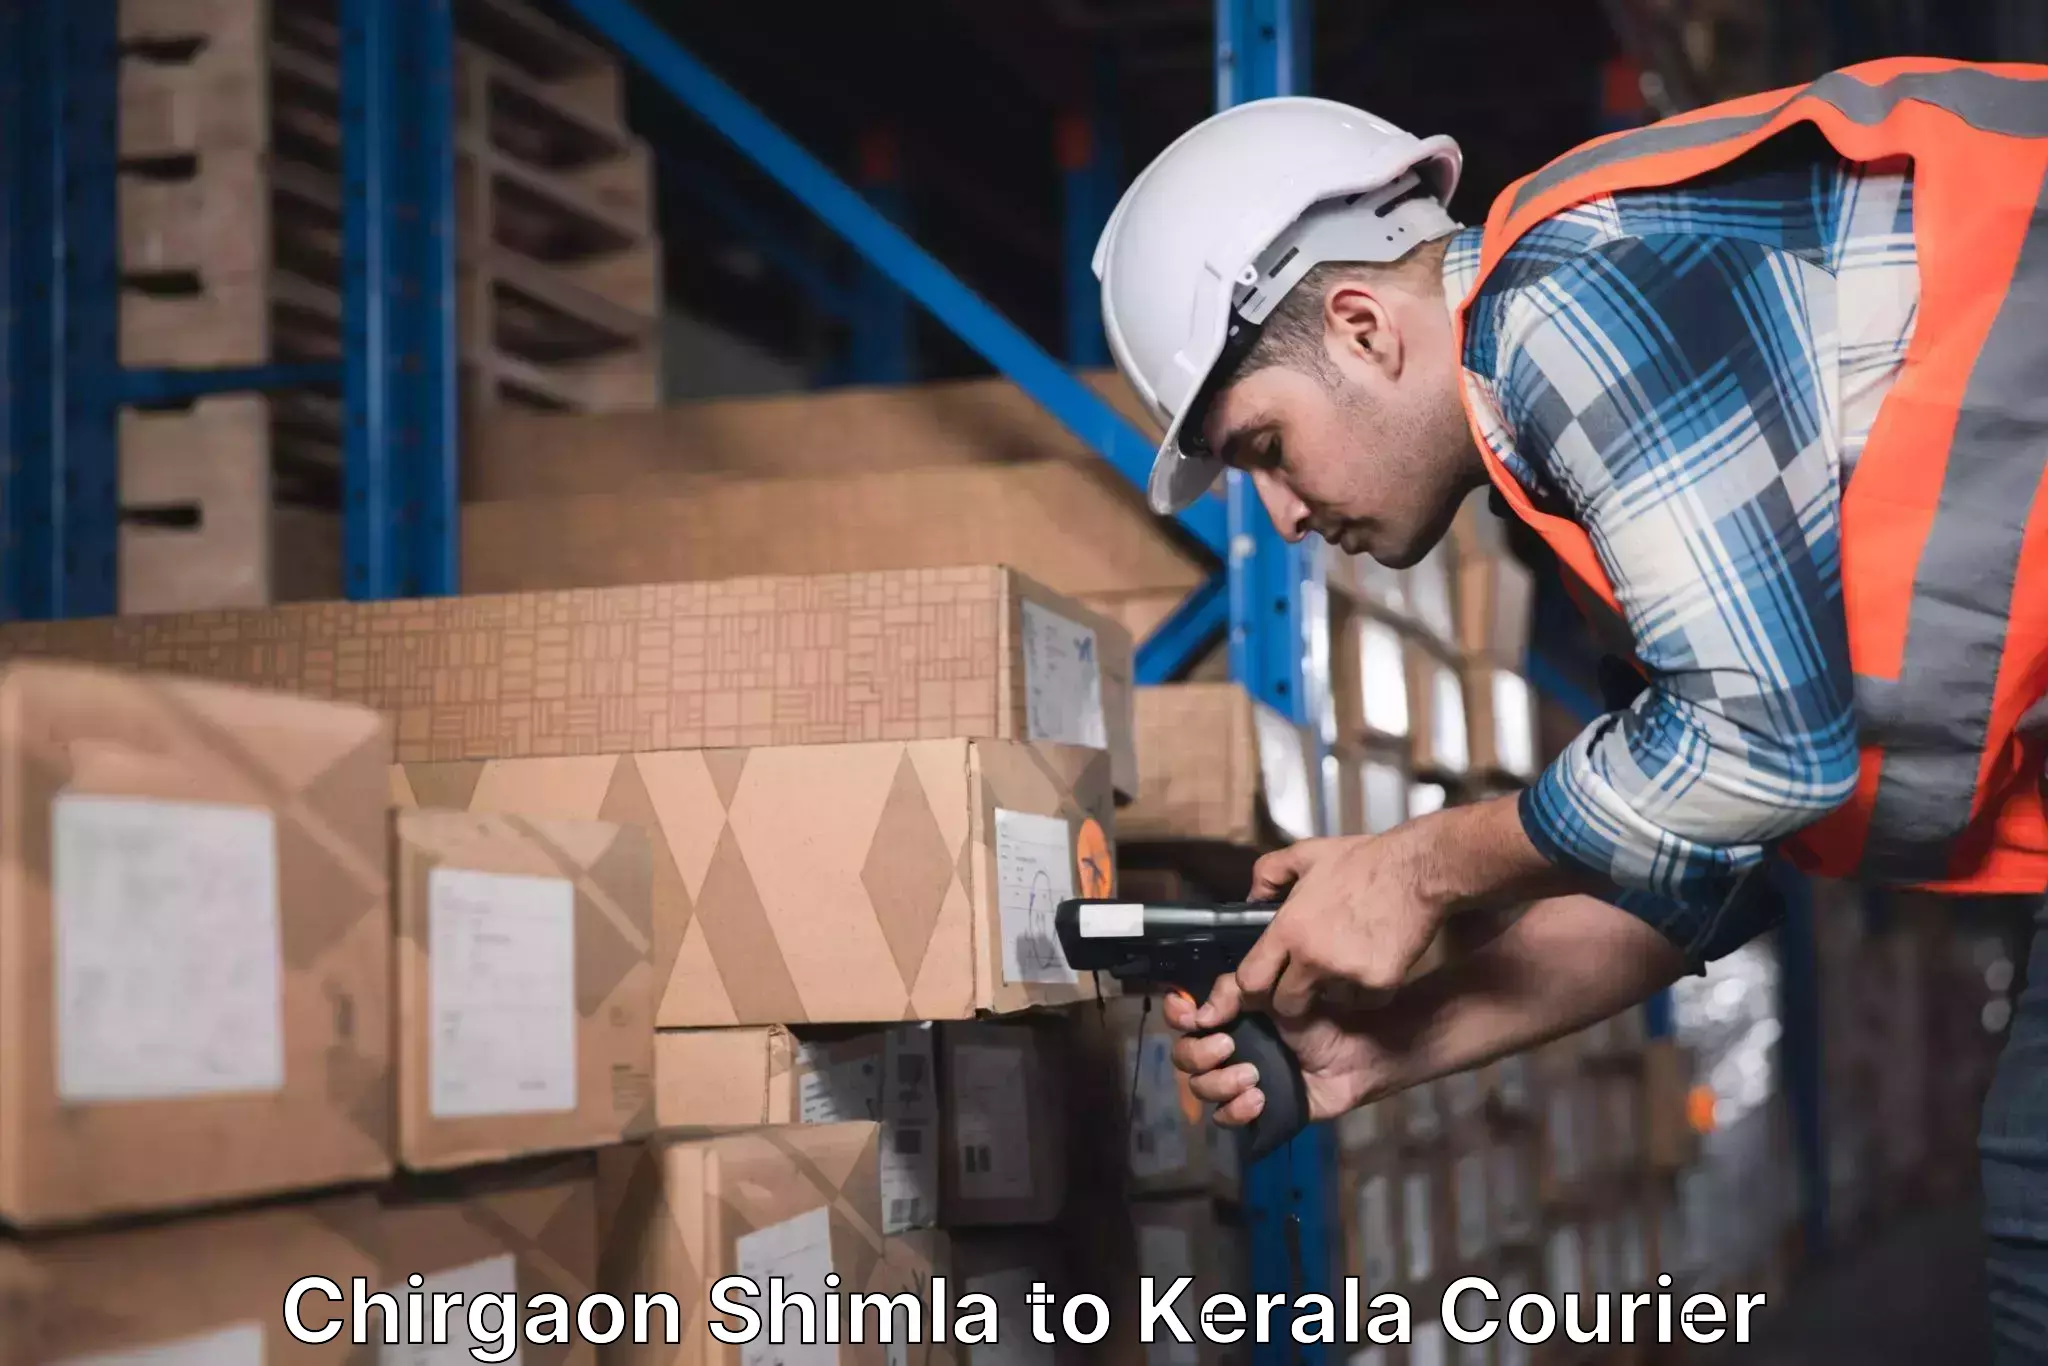 Courier services Chirgaon Shimla to Cochin Port Kochi